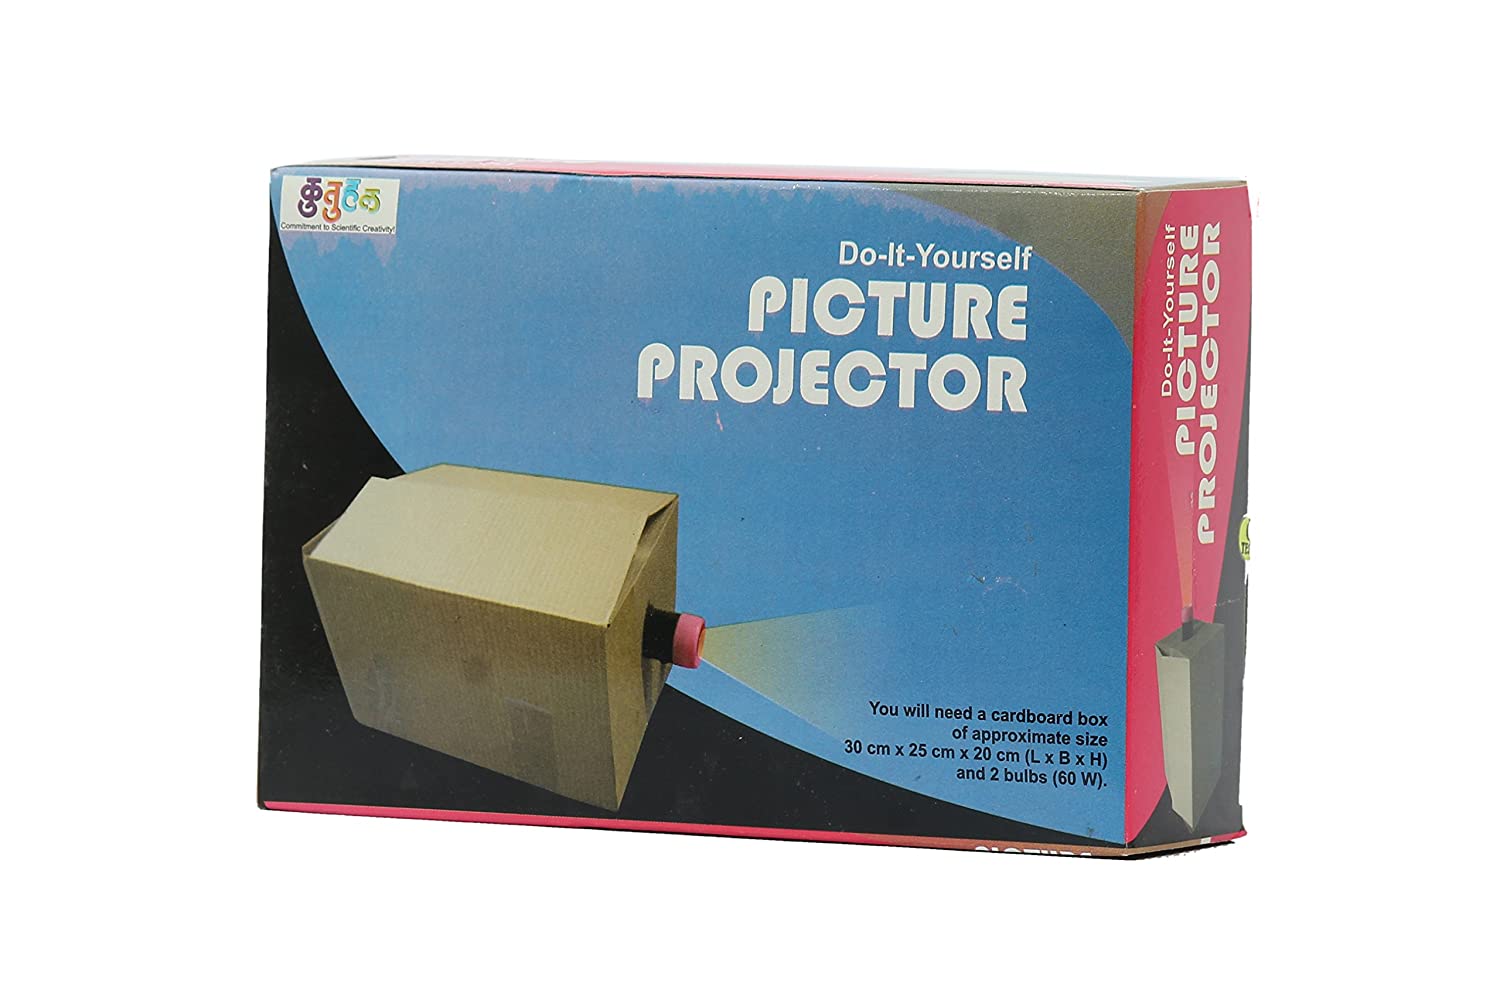 Make A Film Projector